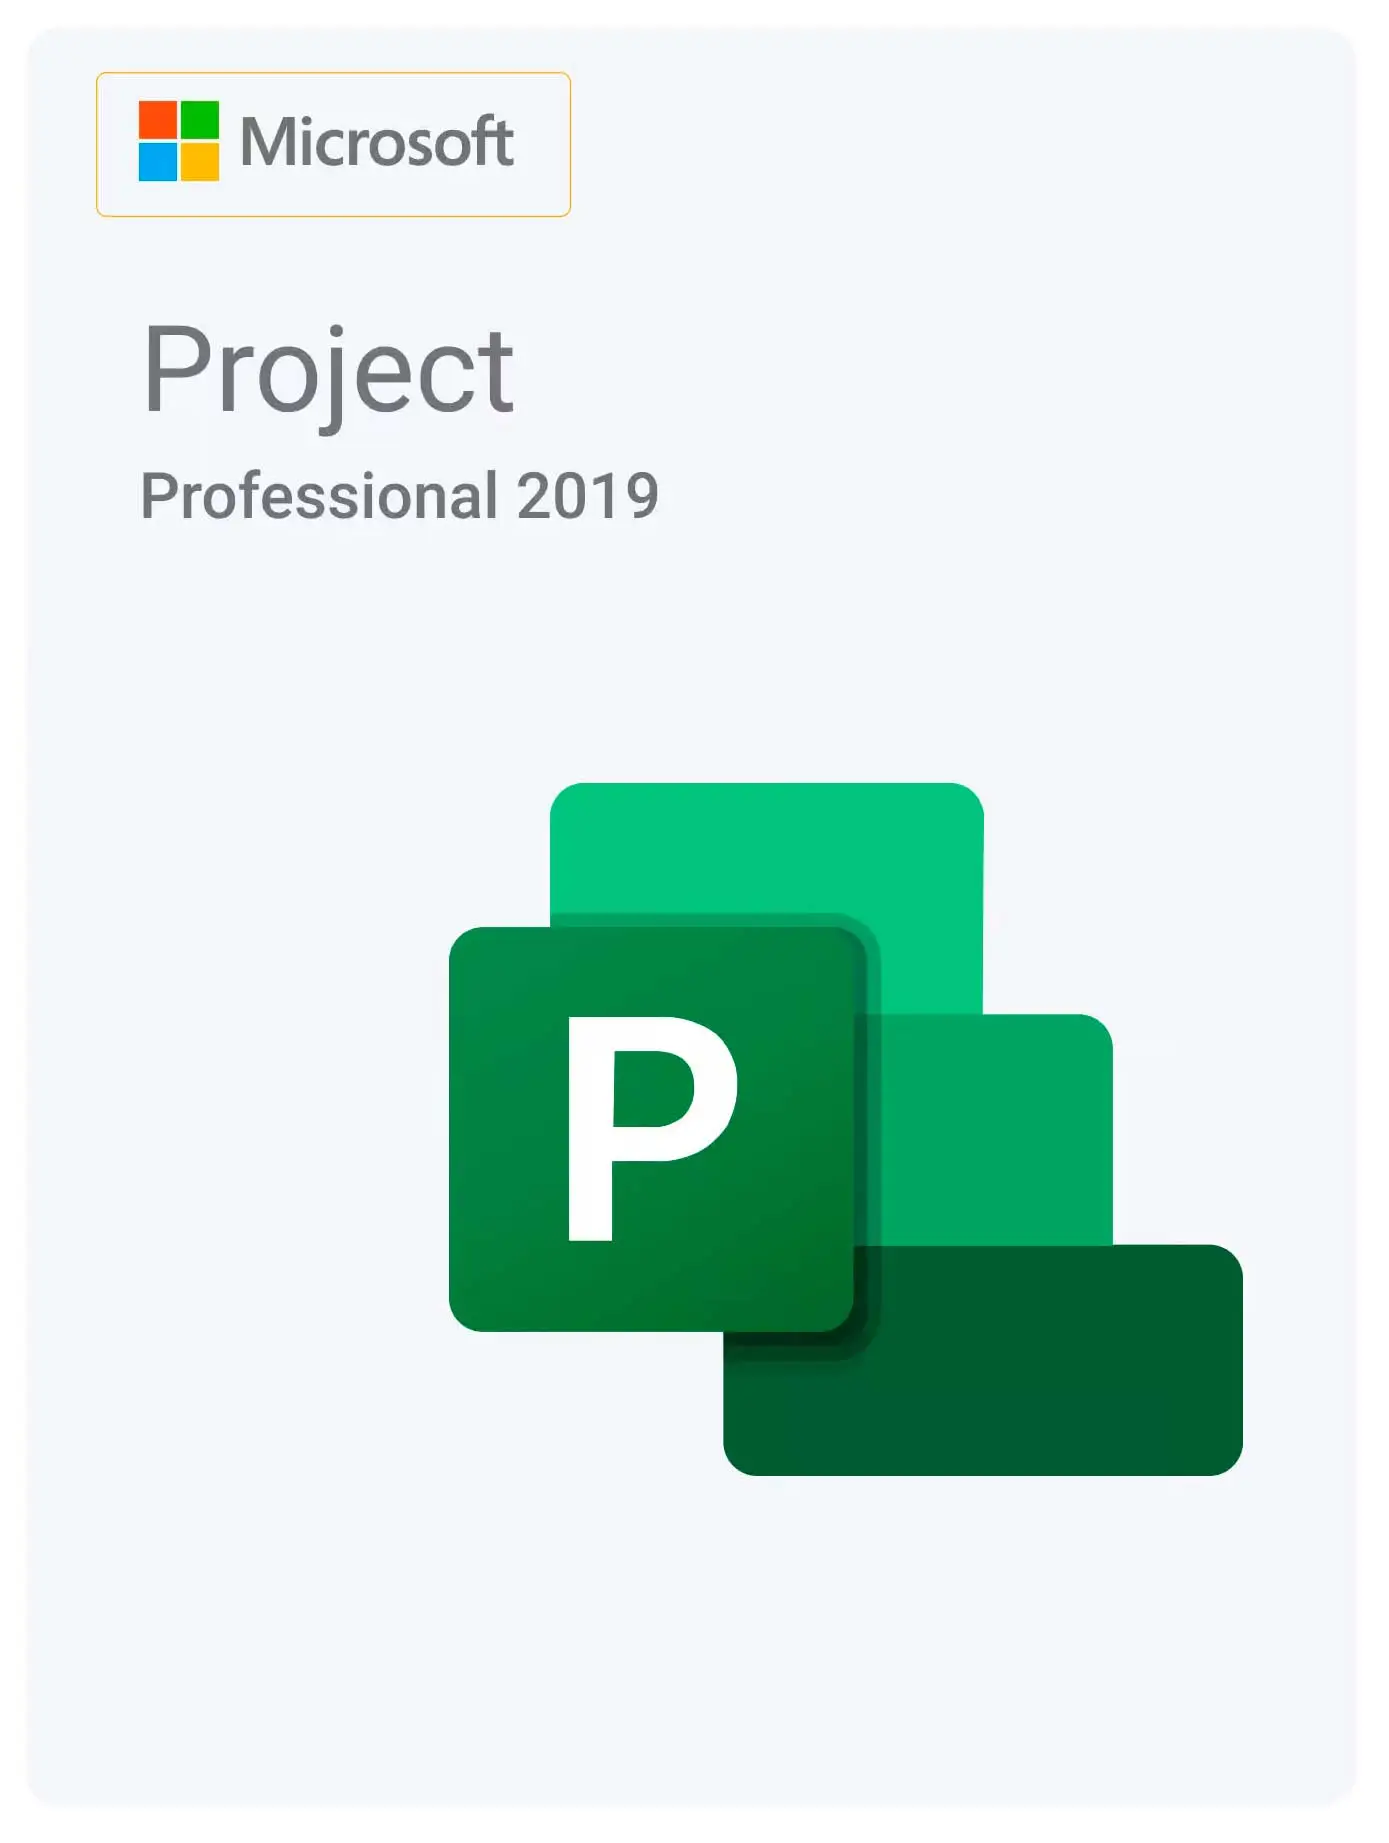 Microsoft Project 2019 Professional ( С привязкой к аккаунту )